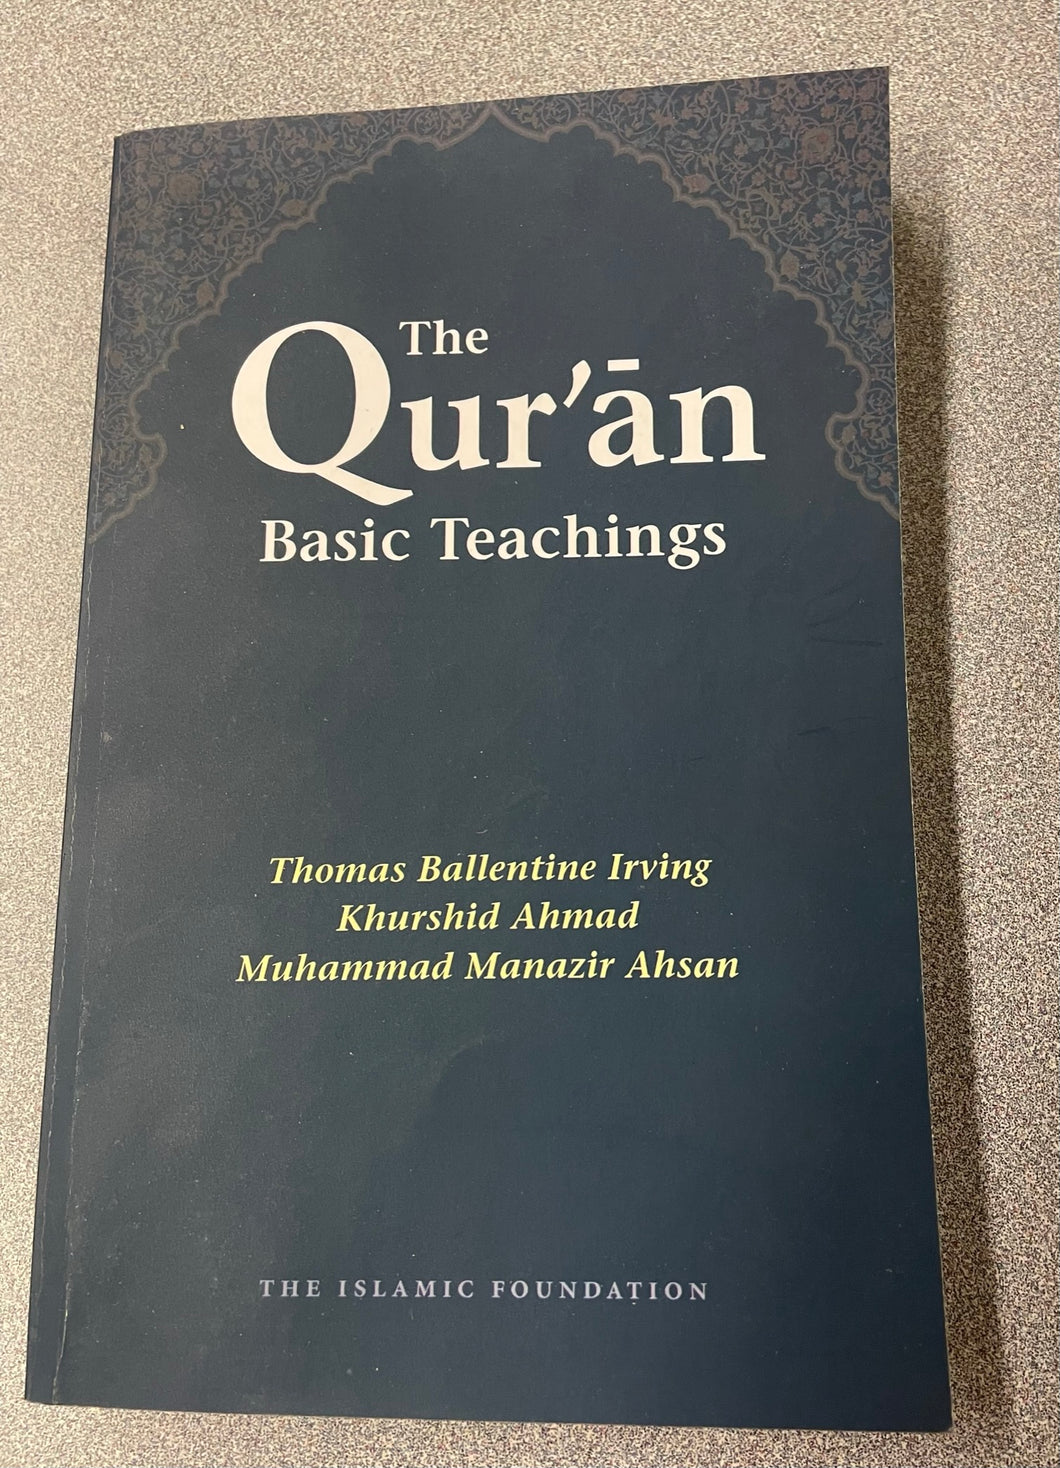 The Qur'an: Basic Teachings, Irving, Thomas Ballentine, et al. [2004] RS 12/22